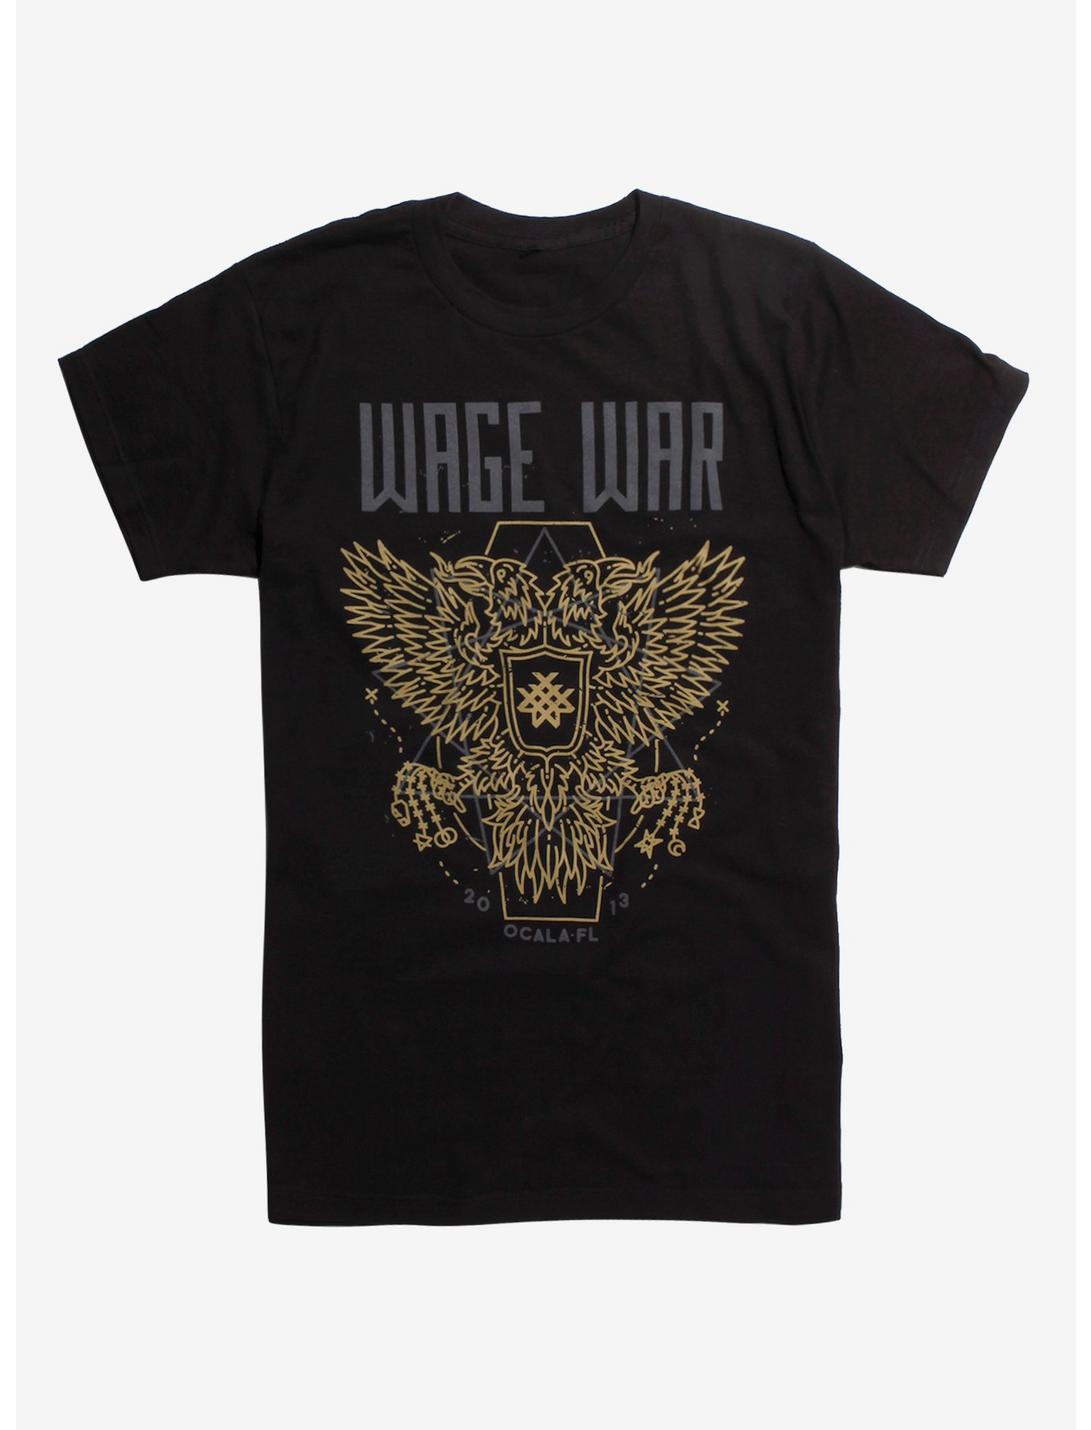 Wage War Two-Headed Eagle T-Shirt, BLACK, hi-res